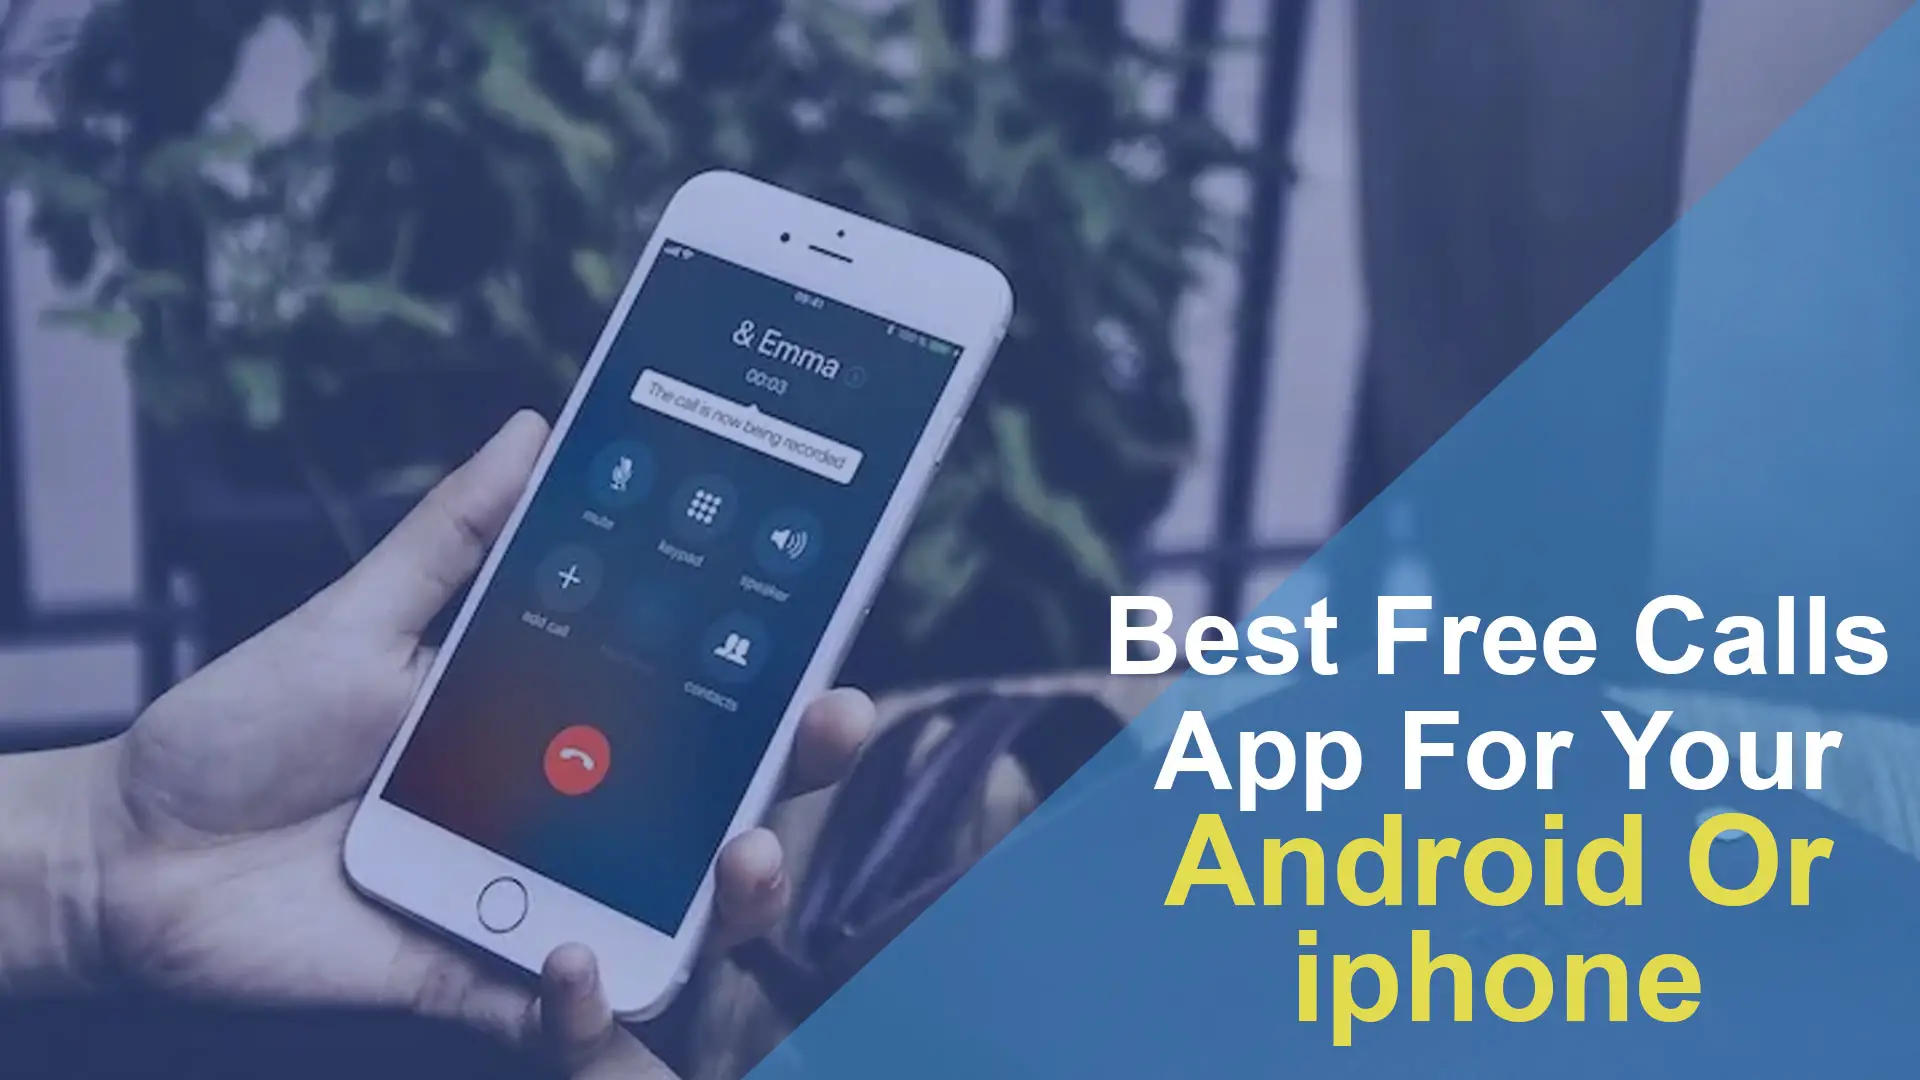 Android 또는 iPhone을 위한 최고의 무료 통화 앱